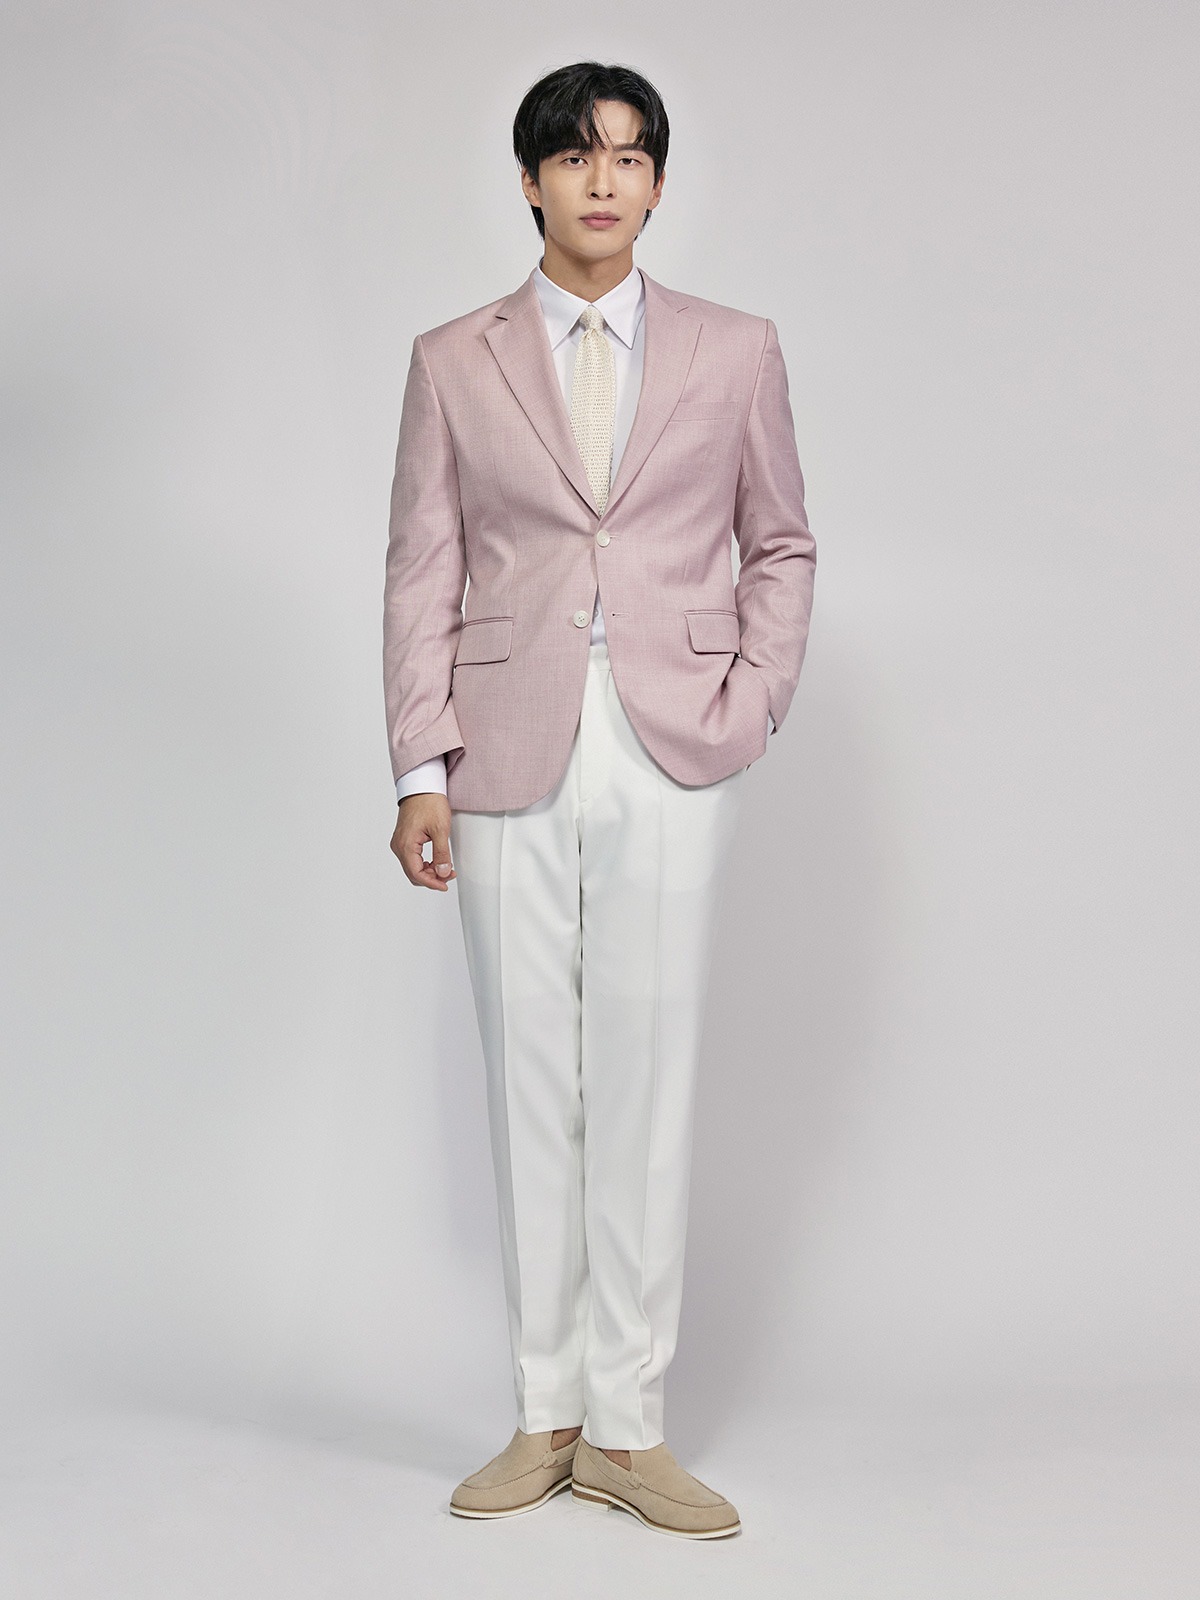 mans pink suit [rental]